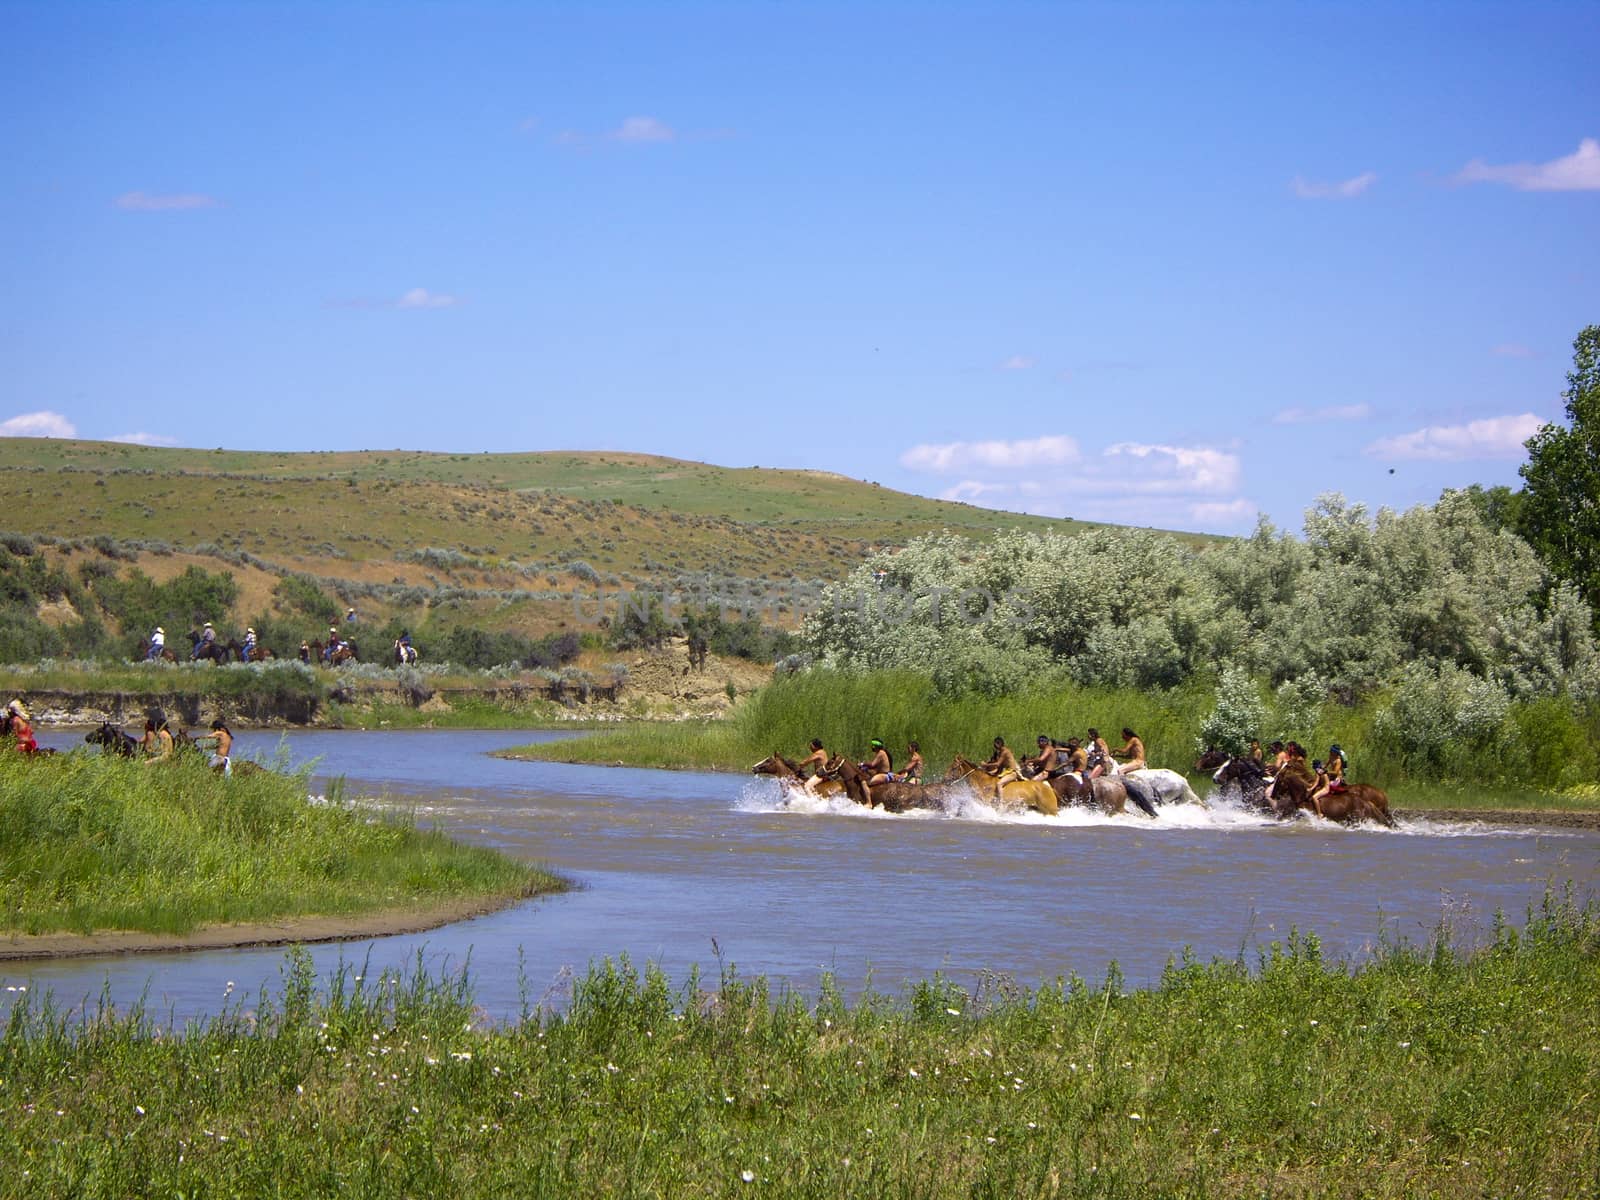 Forging the Little Bighorn River by emattil